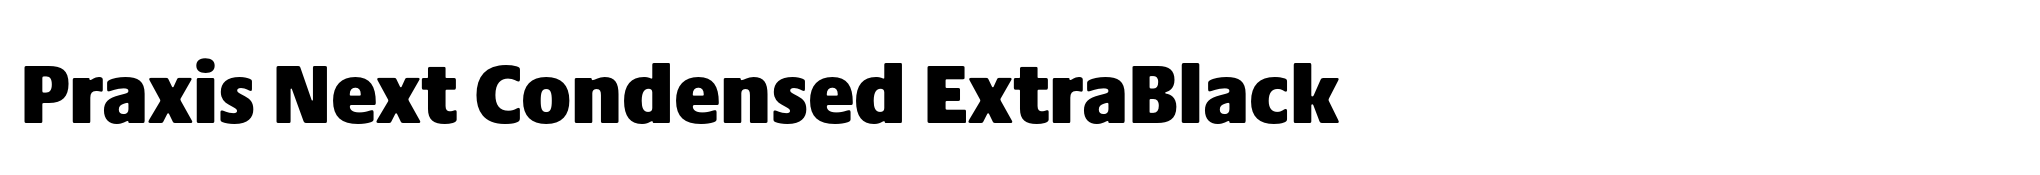 Praxis Next Condensed ExtraBlack image